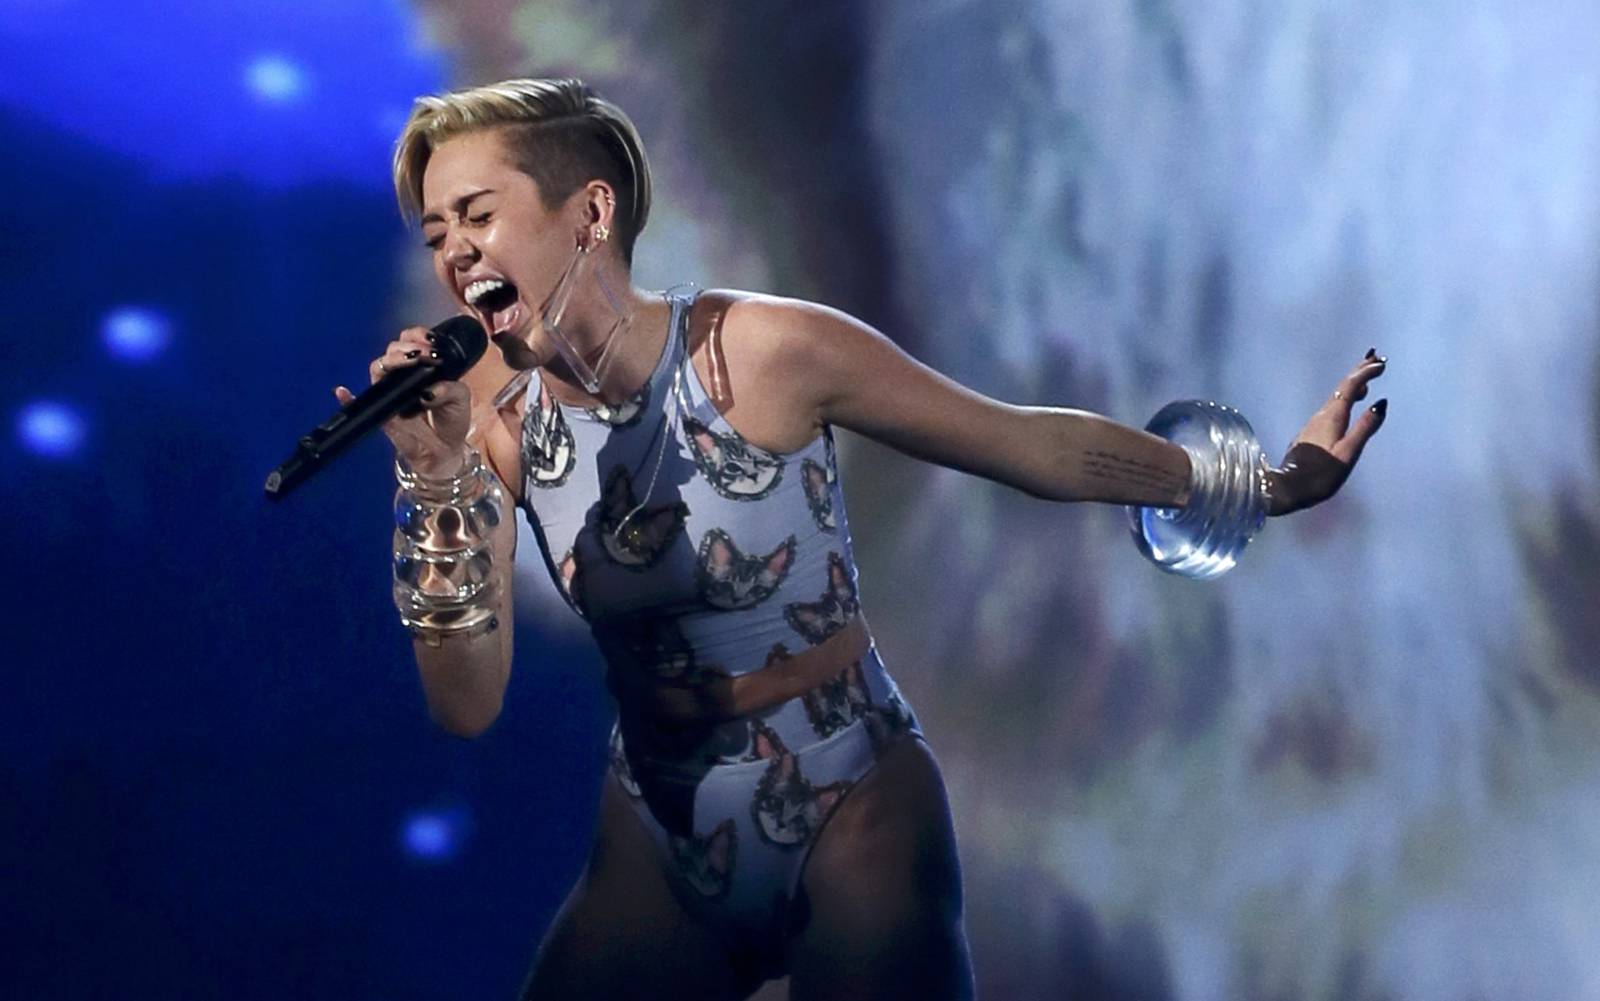 Miley-Cyrus-191.jpg